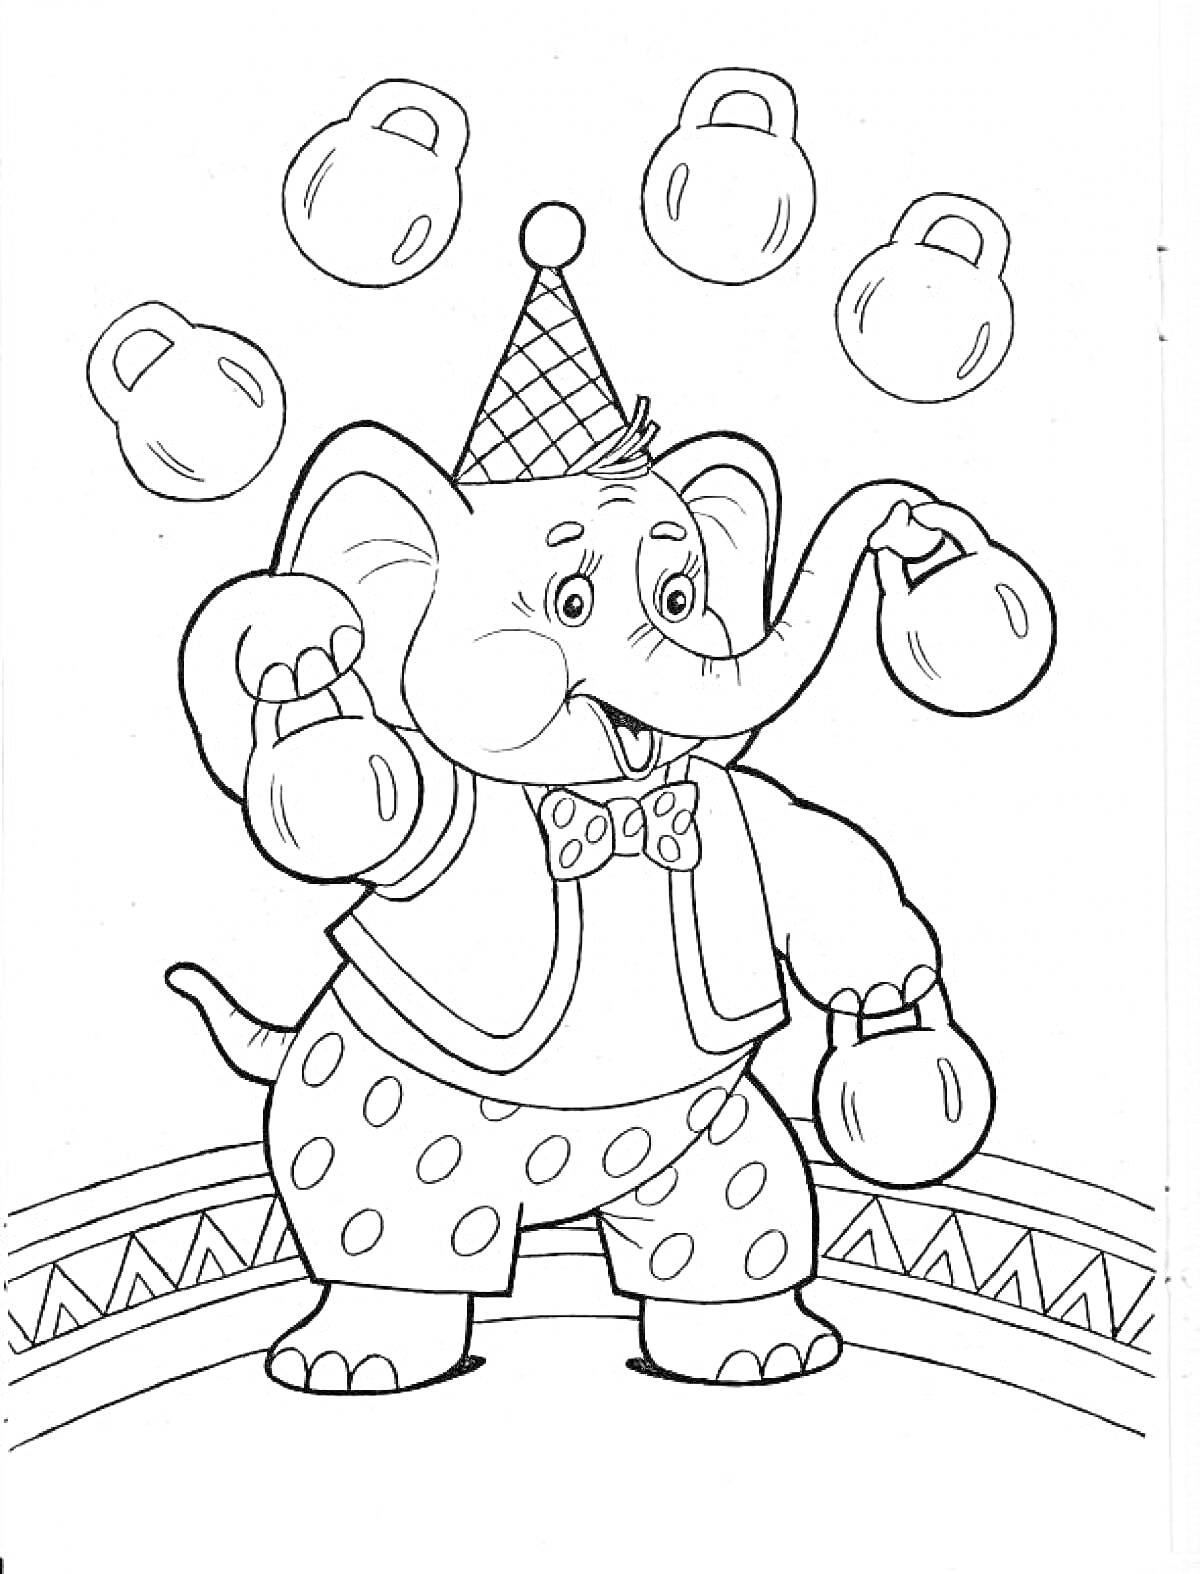 Раскраска Слон в цирковом костюме, жонглирующий гирями на арене